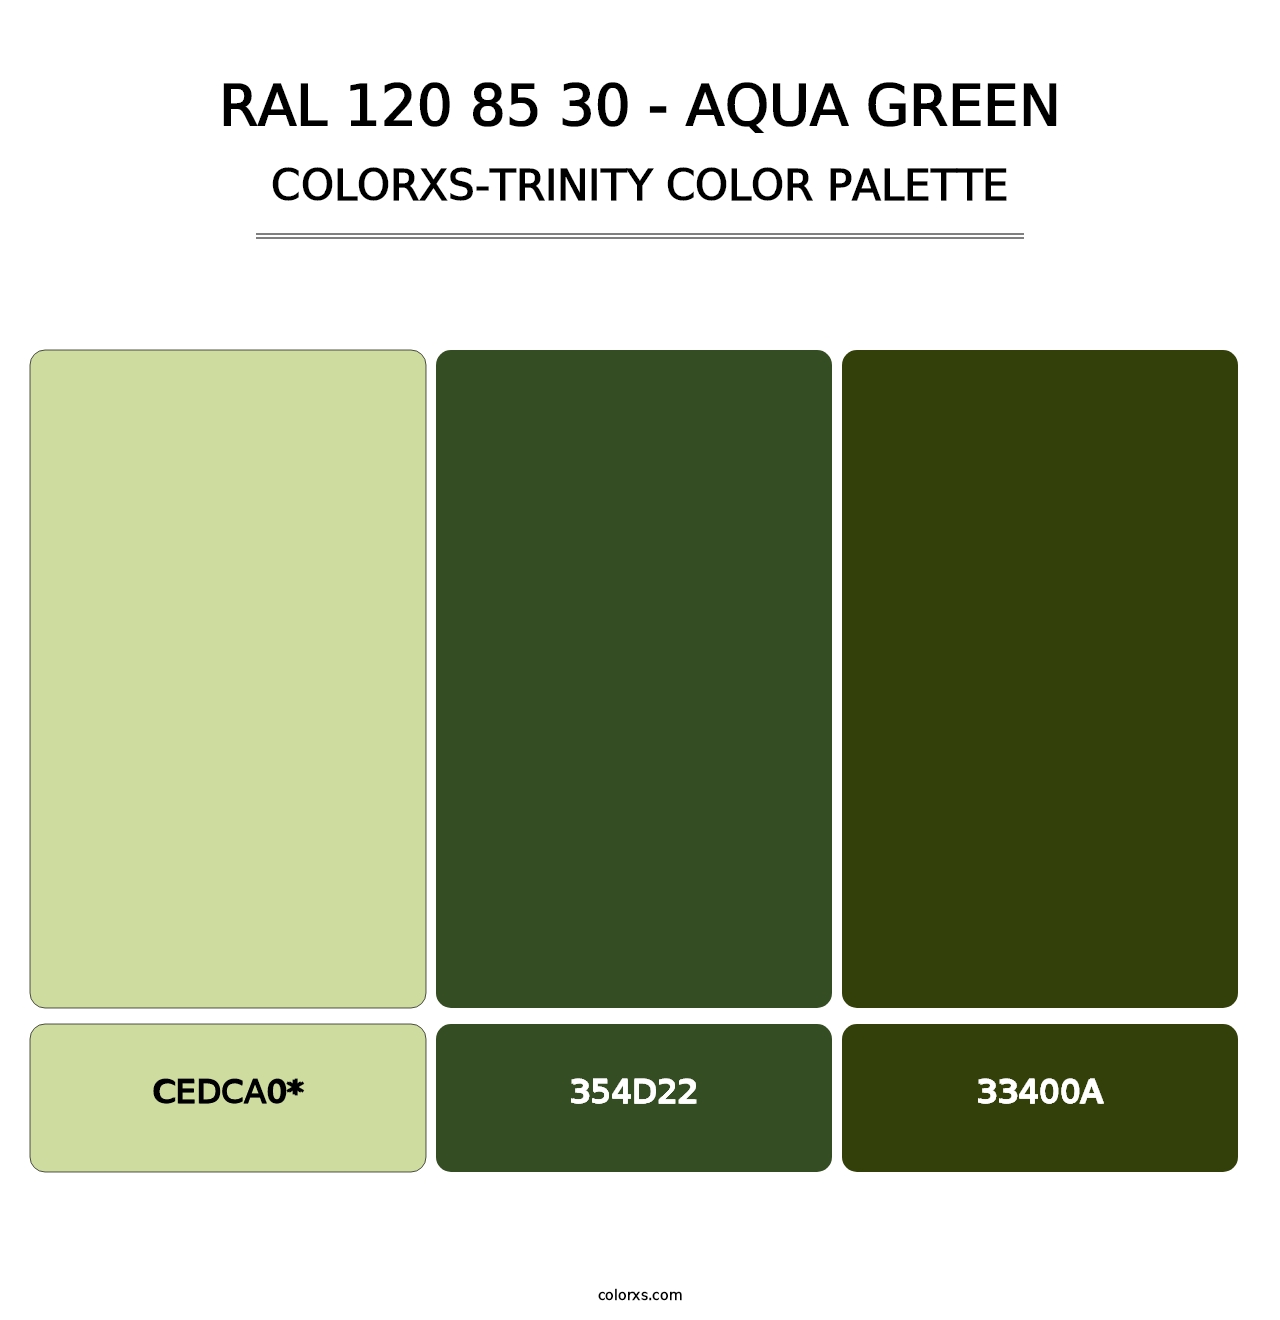 RAL 120 85 30 - Aqua Green - Colorxs Trinity Palette